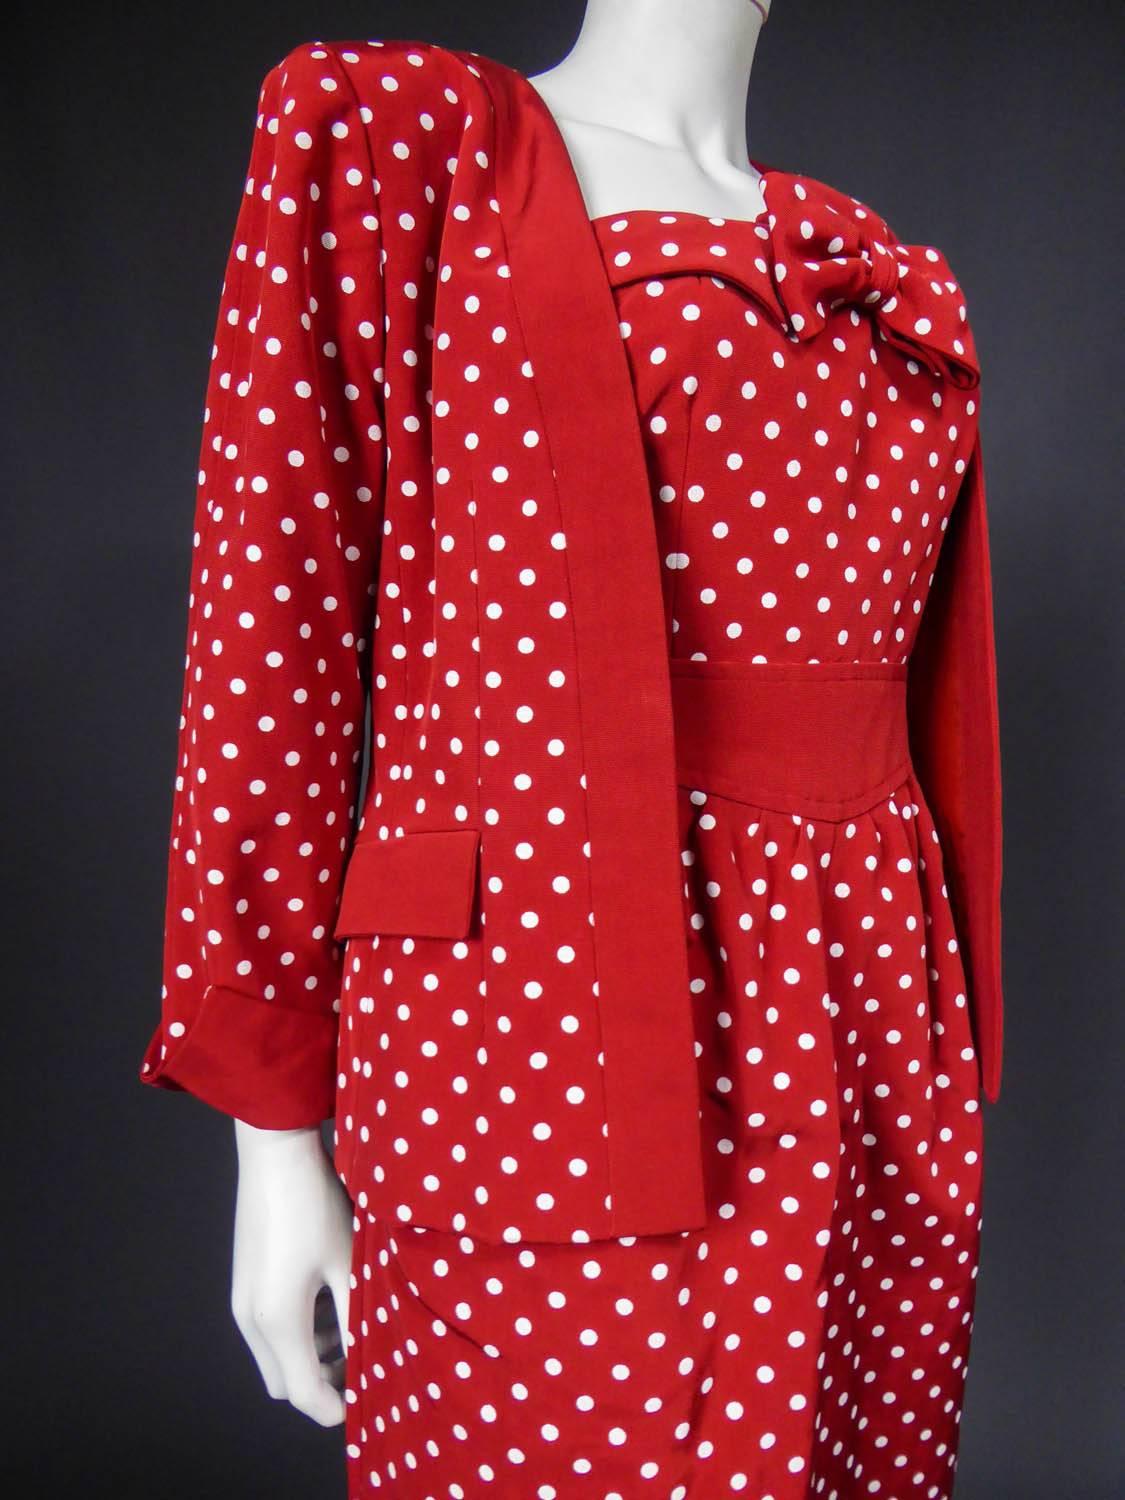 Women's A Nina Ricci Dress and Jacket Silk Polka Dot Set - Circa 1980 For Sale